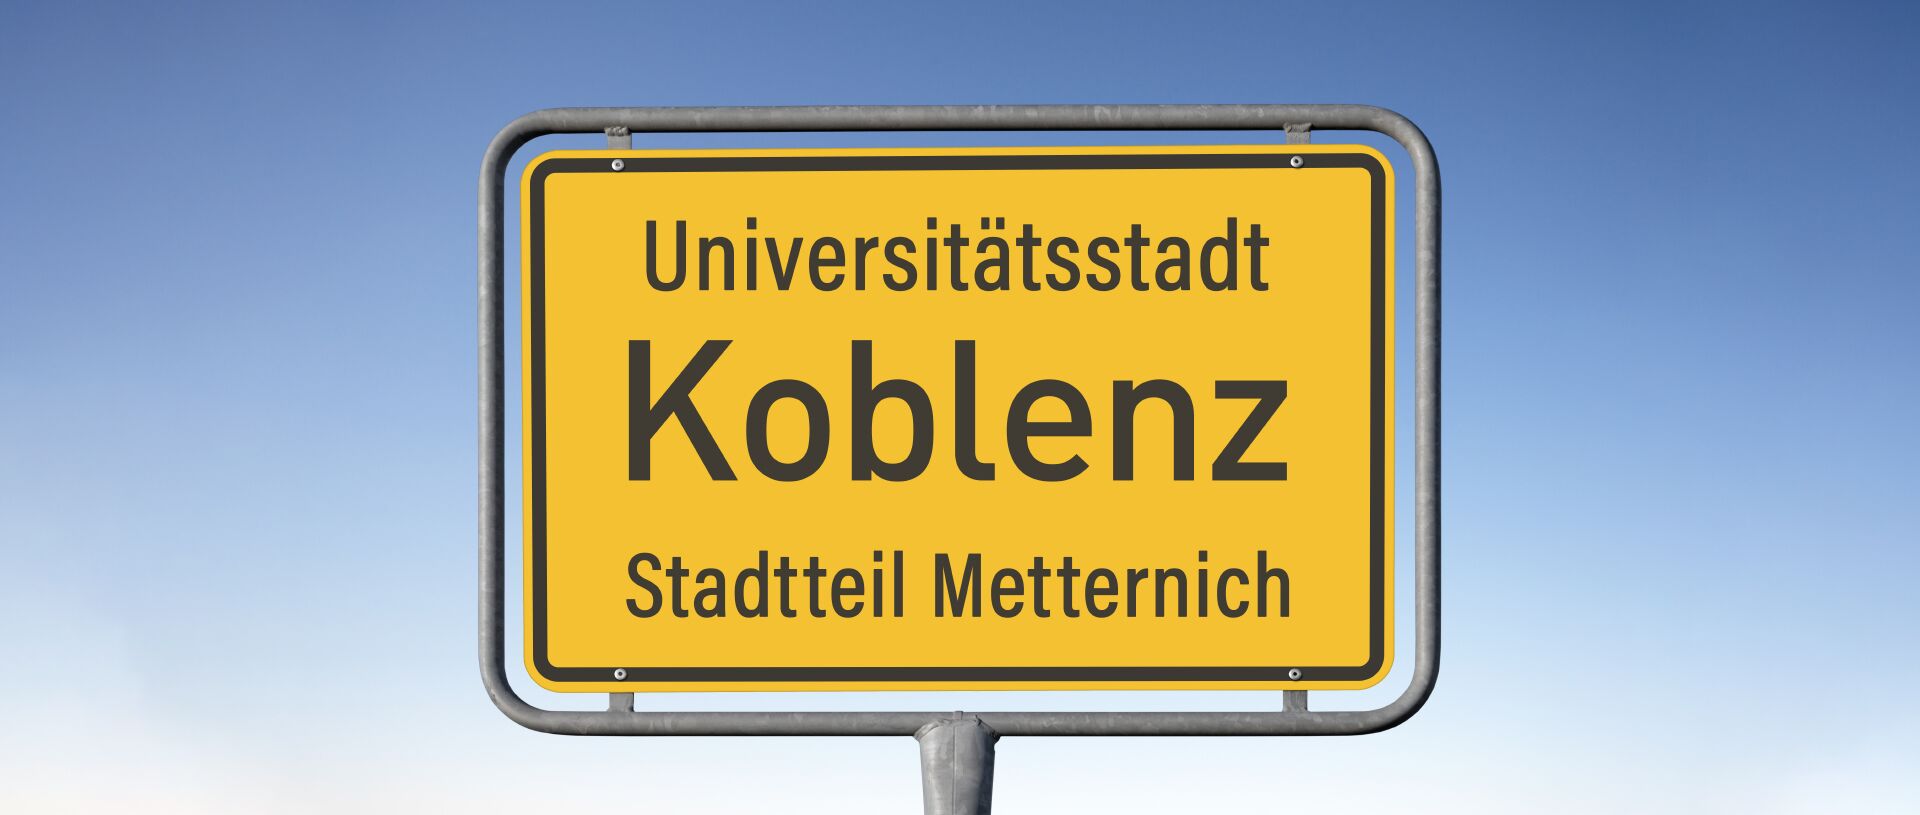 Ortstafel Universitätsstadt Koblenz, Stadtteil Metternich, (Symbolbild)